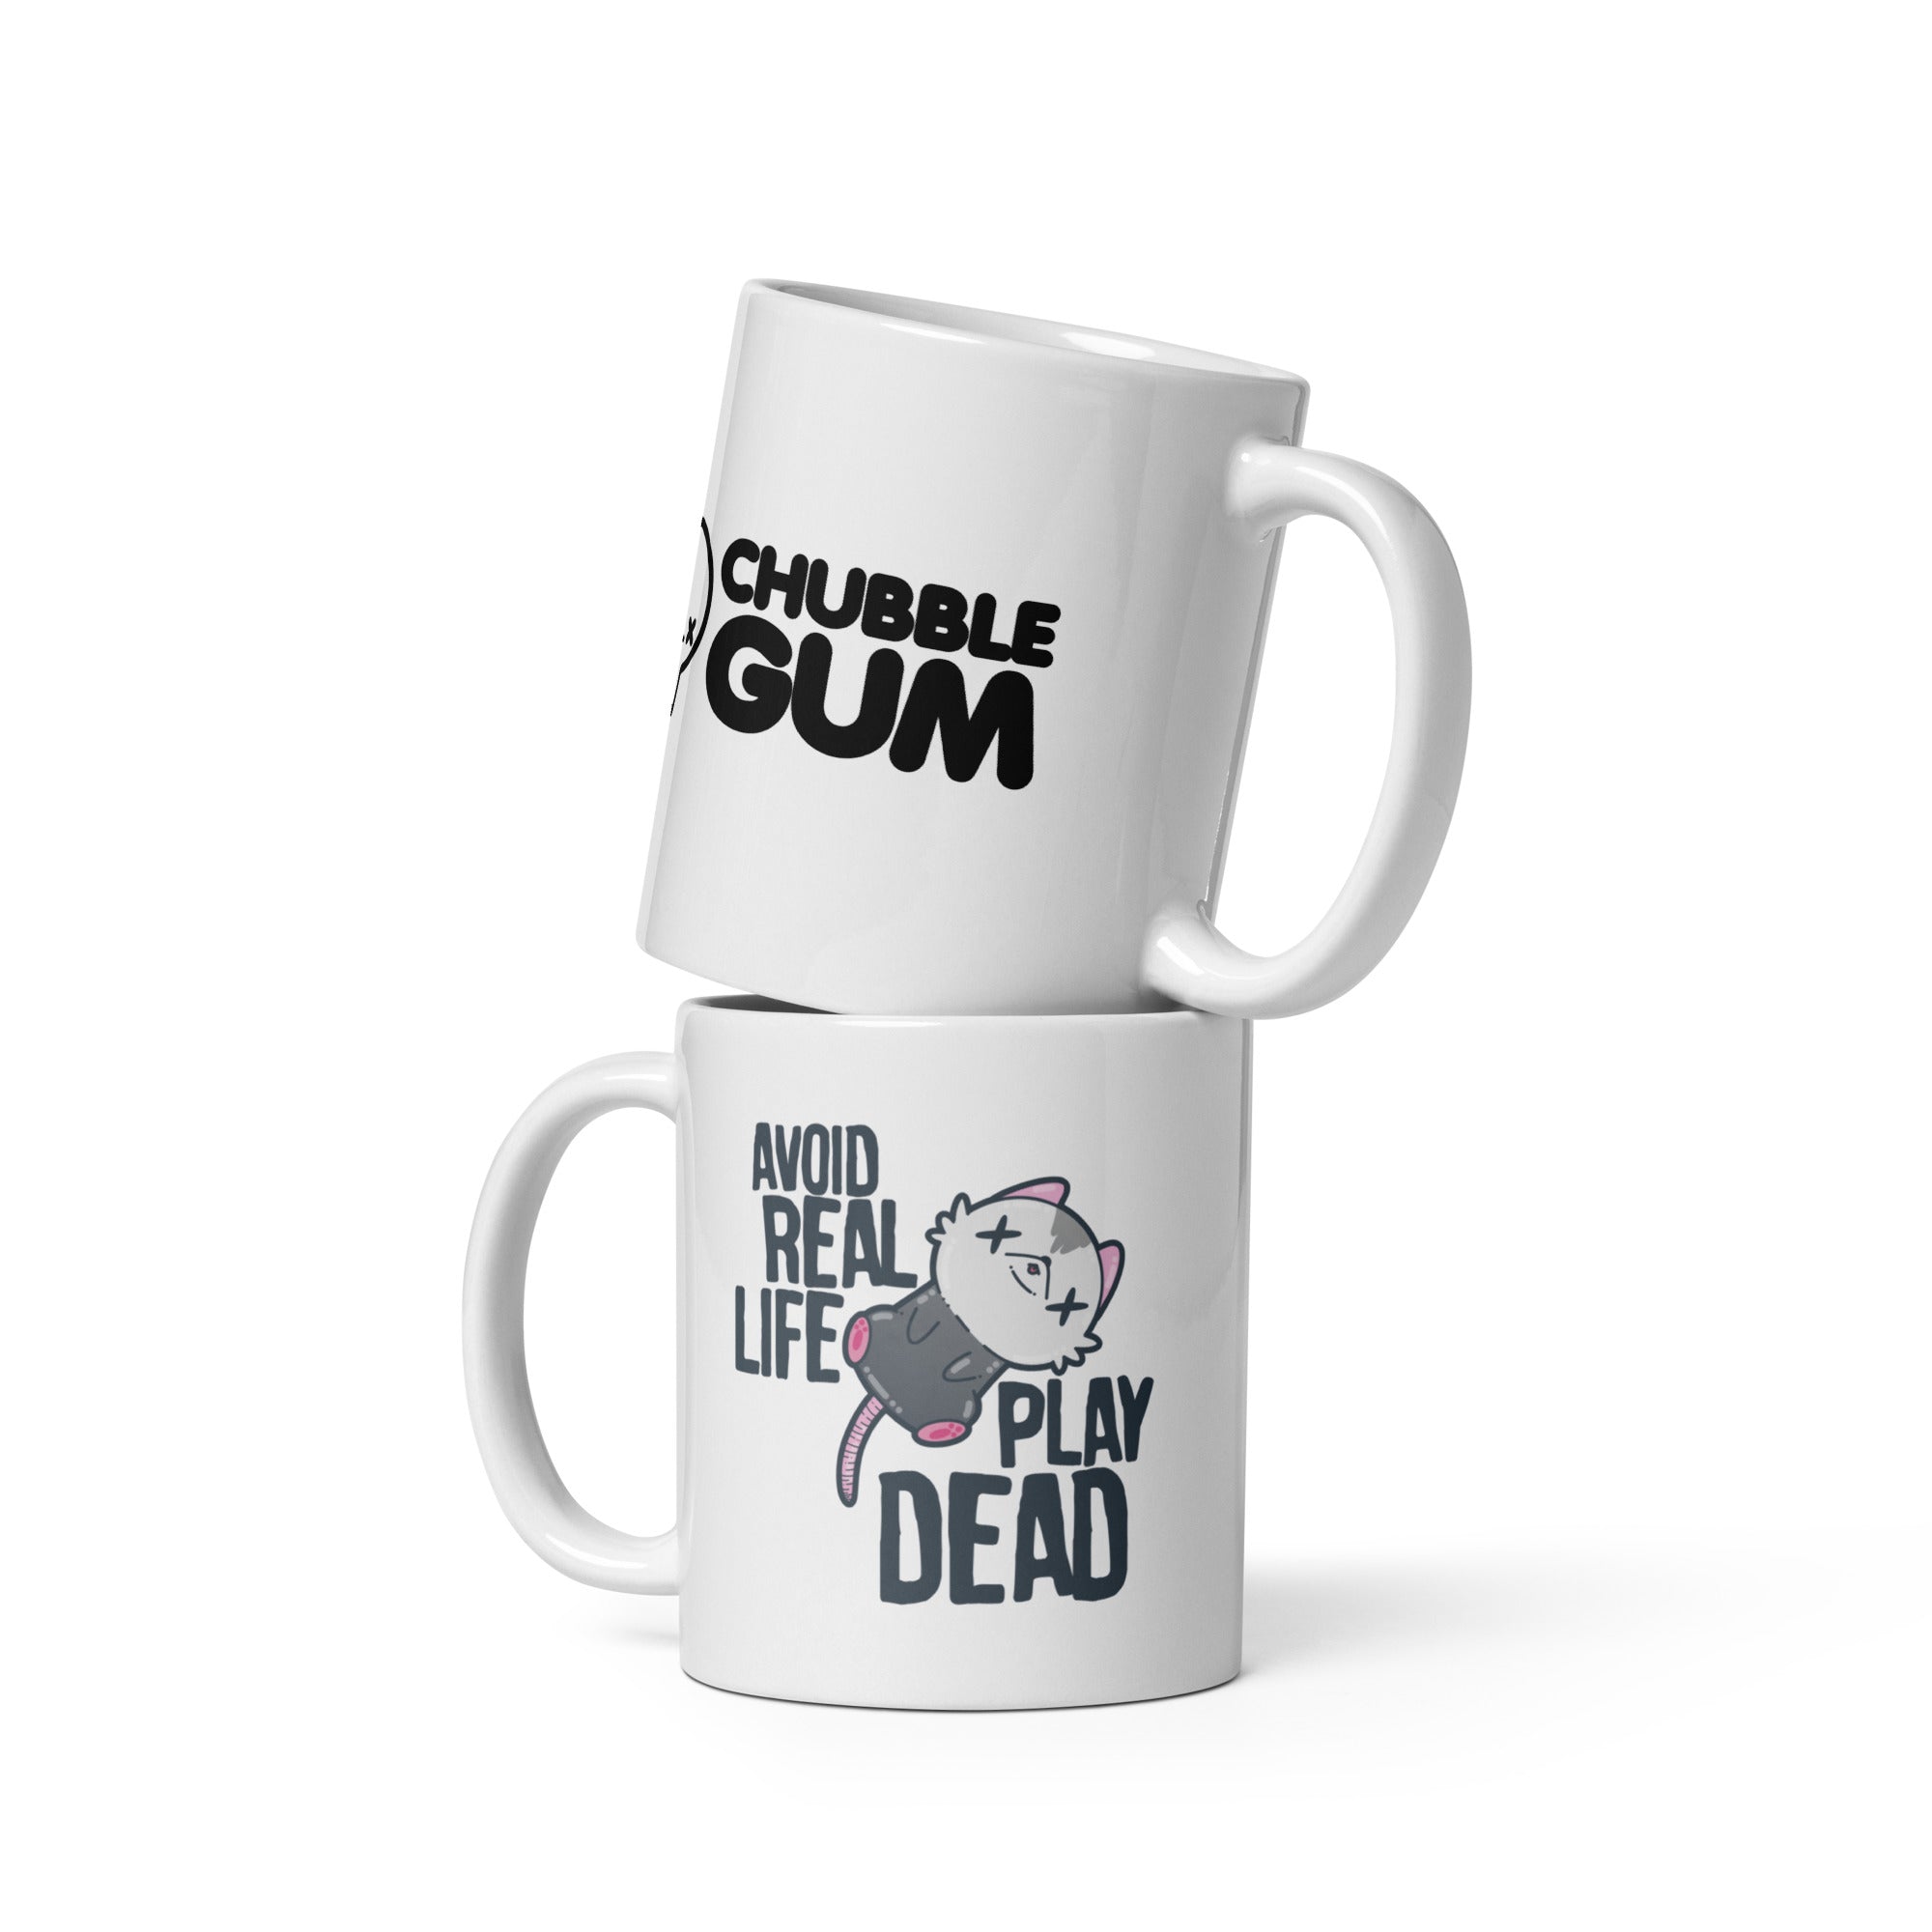 AVOID REAL LIFE PLAY DEAD - Coffee Mug - ChubbleGumLLC